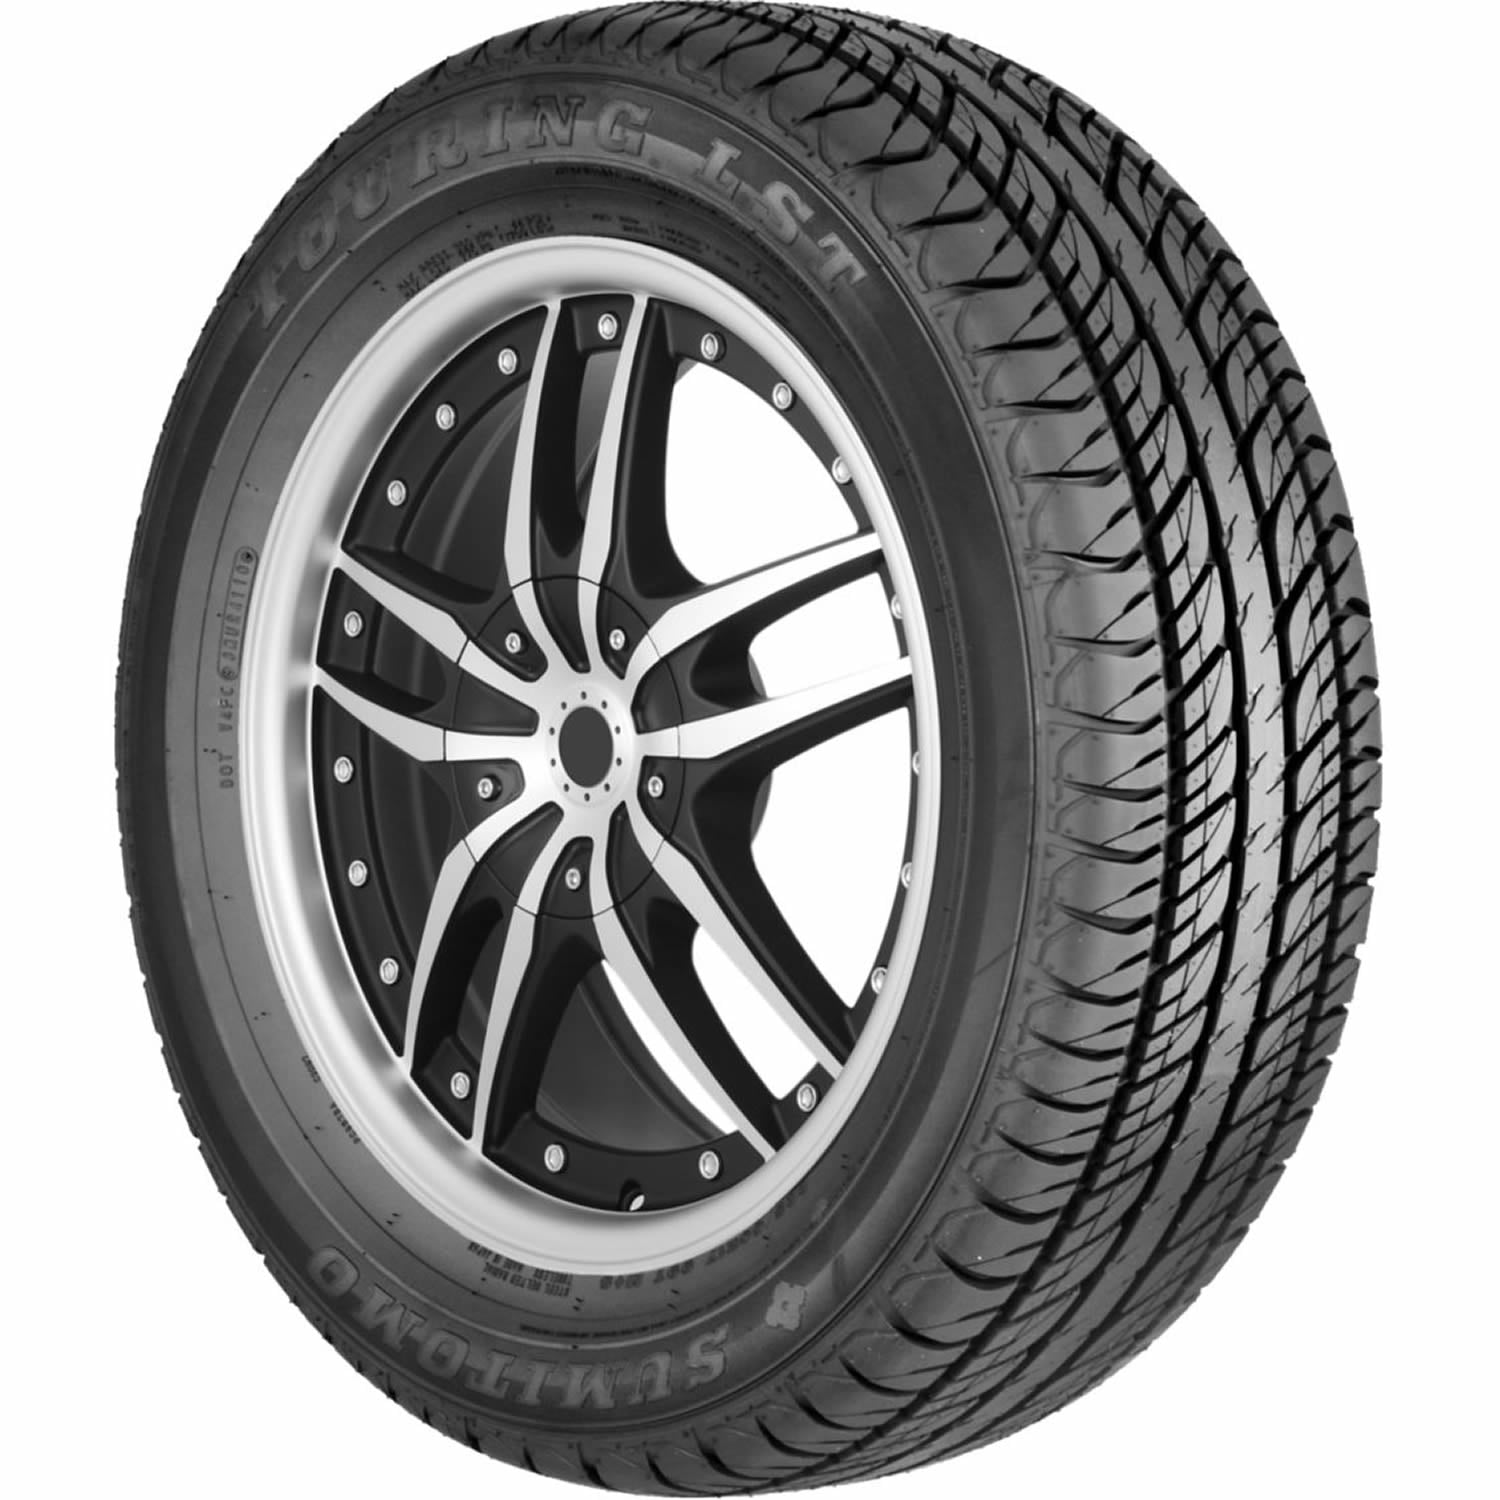 SUMITOMO TOURING LS 215/55R16 (25.4X8.7R 16) Tires